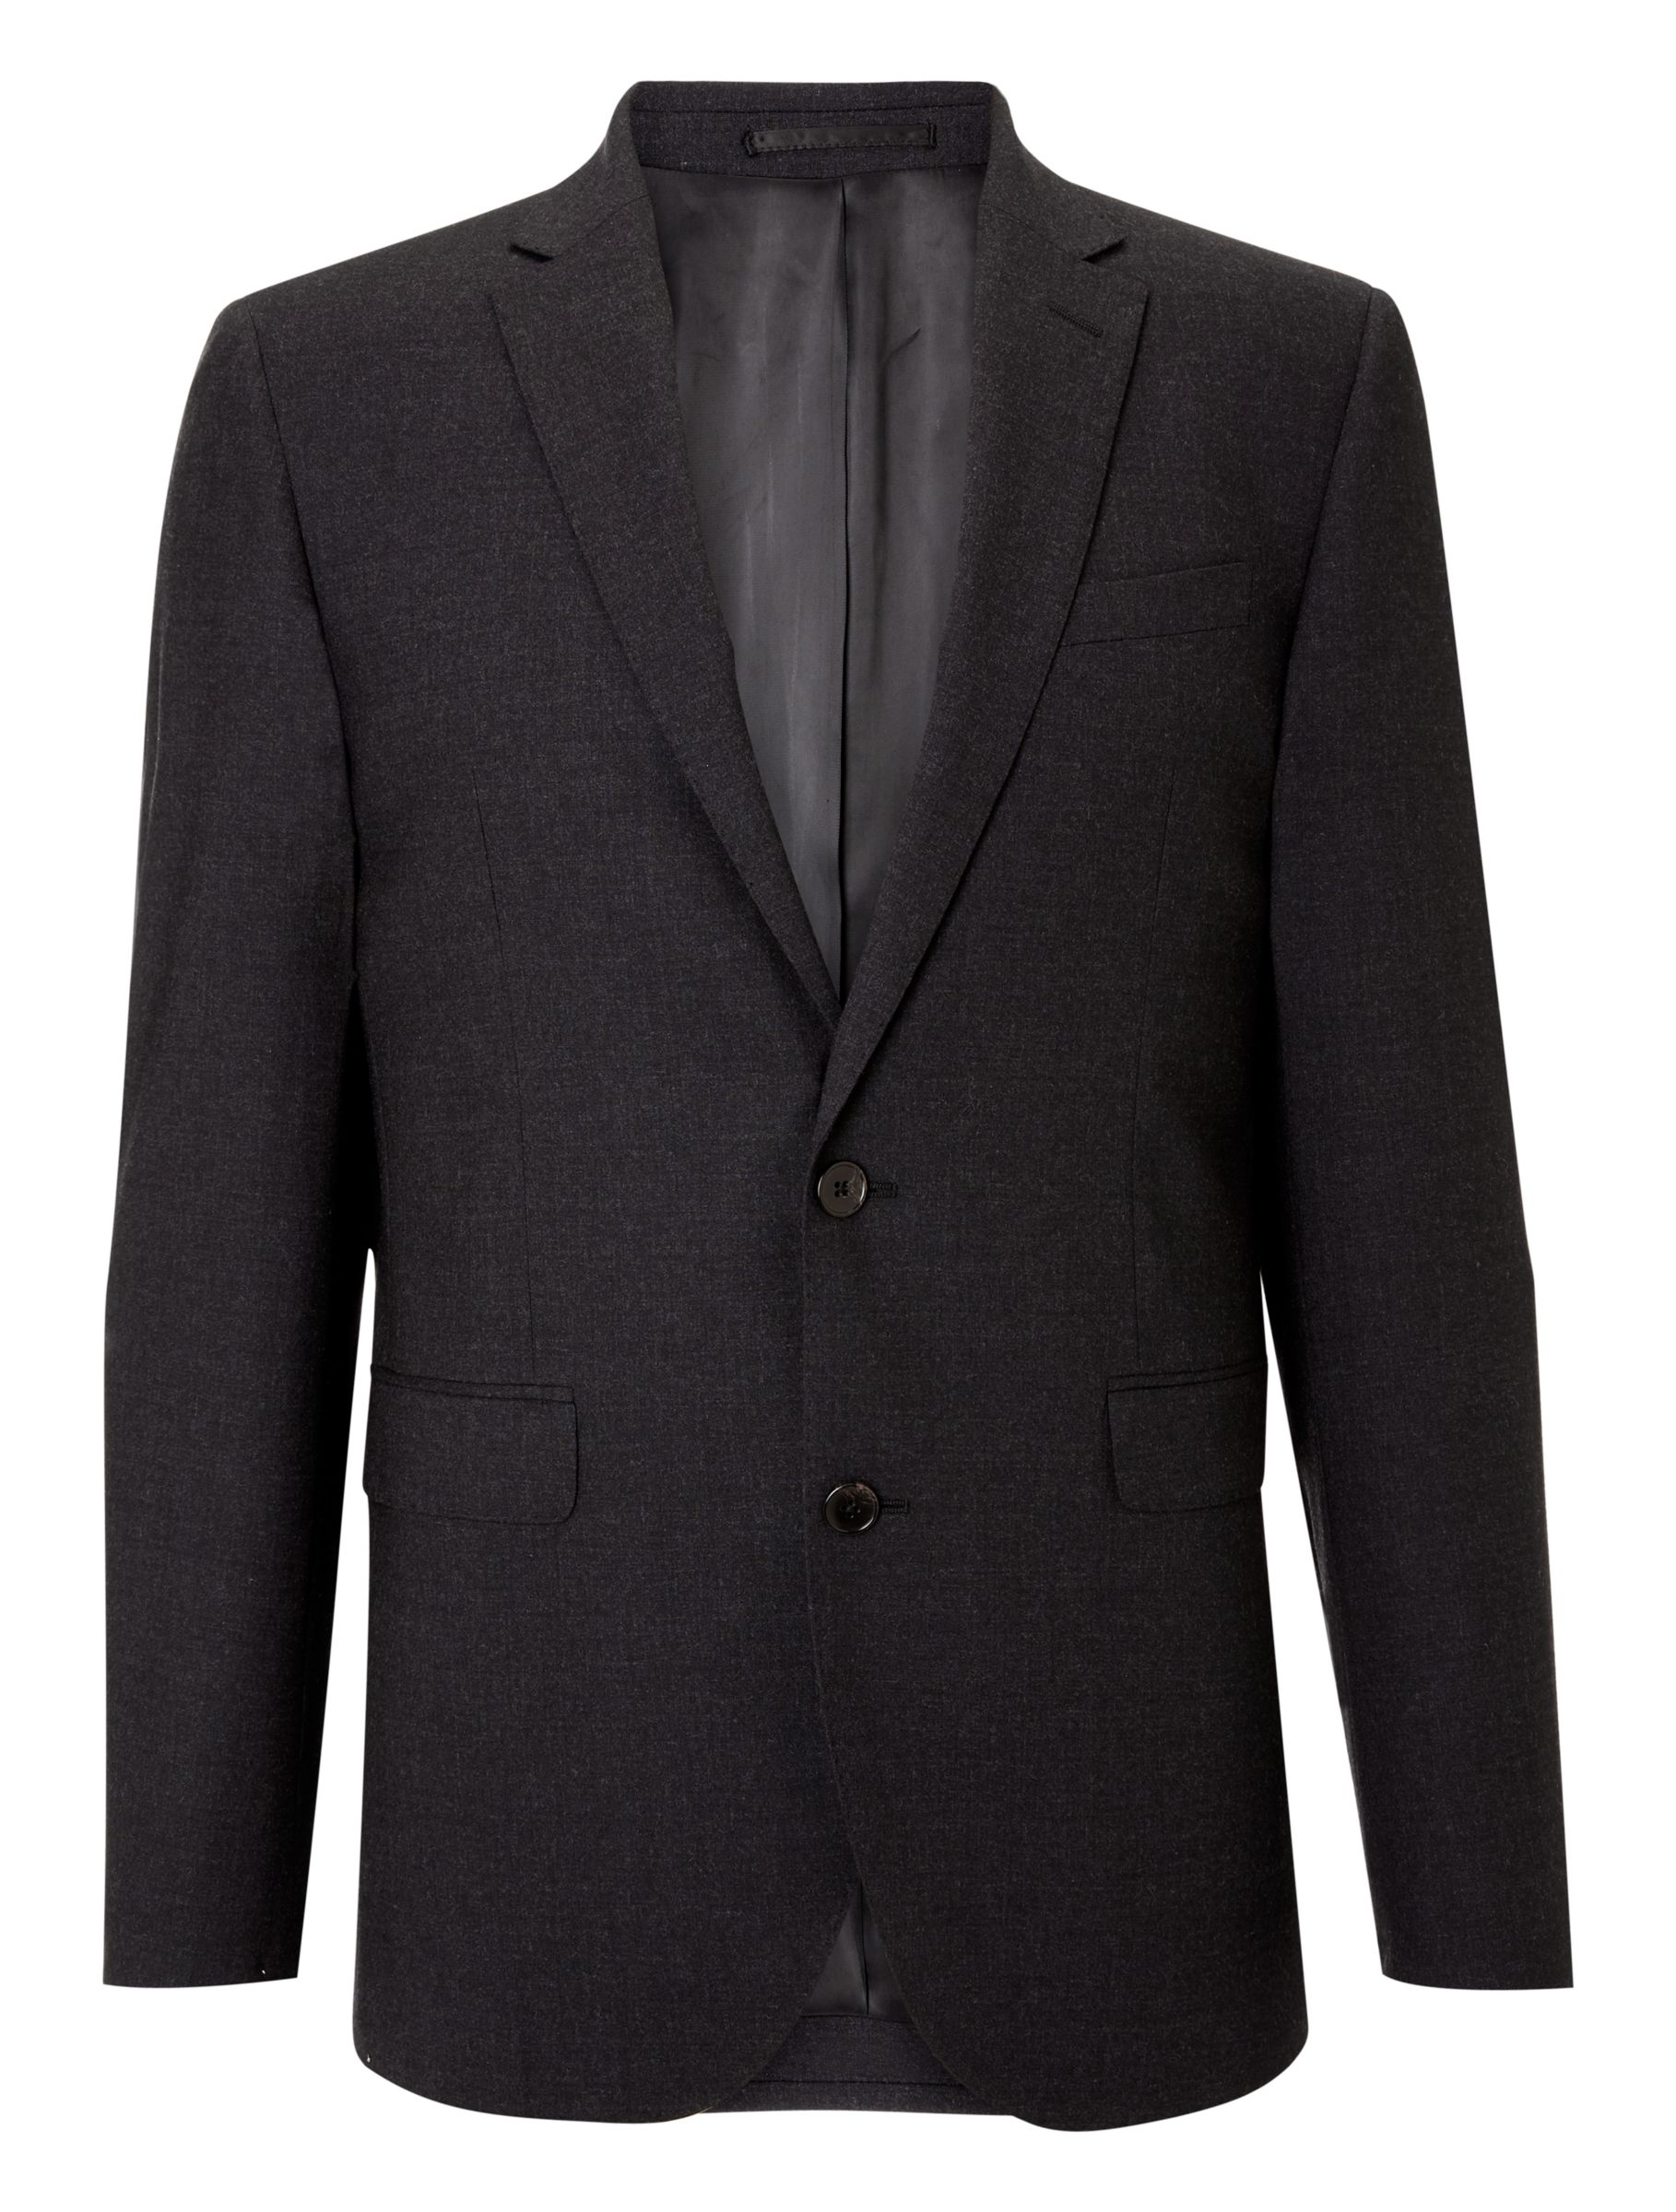 How to buy a men's suit online | John Lewis & Partners